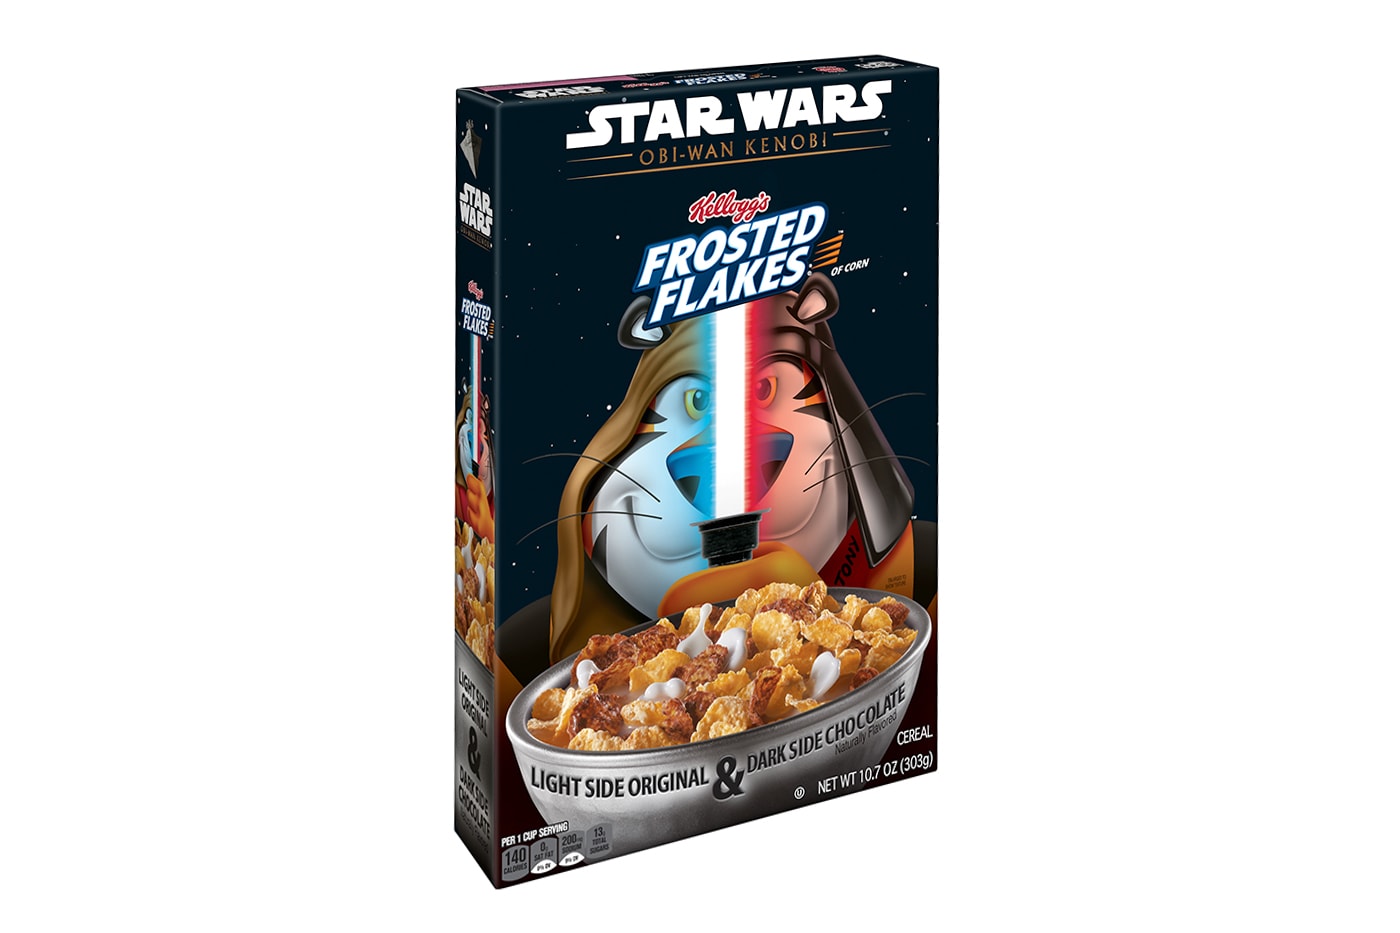 Kellogg's Frosted Flakes Obi-Wan Kenobi Cereal Release